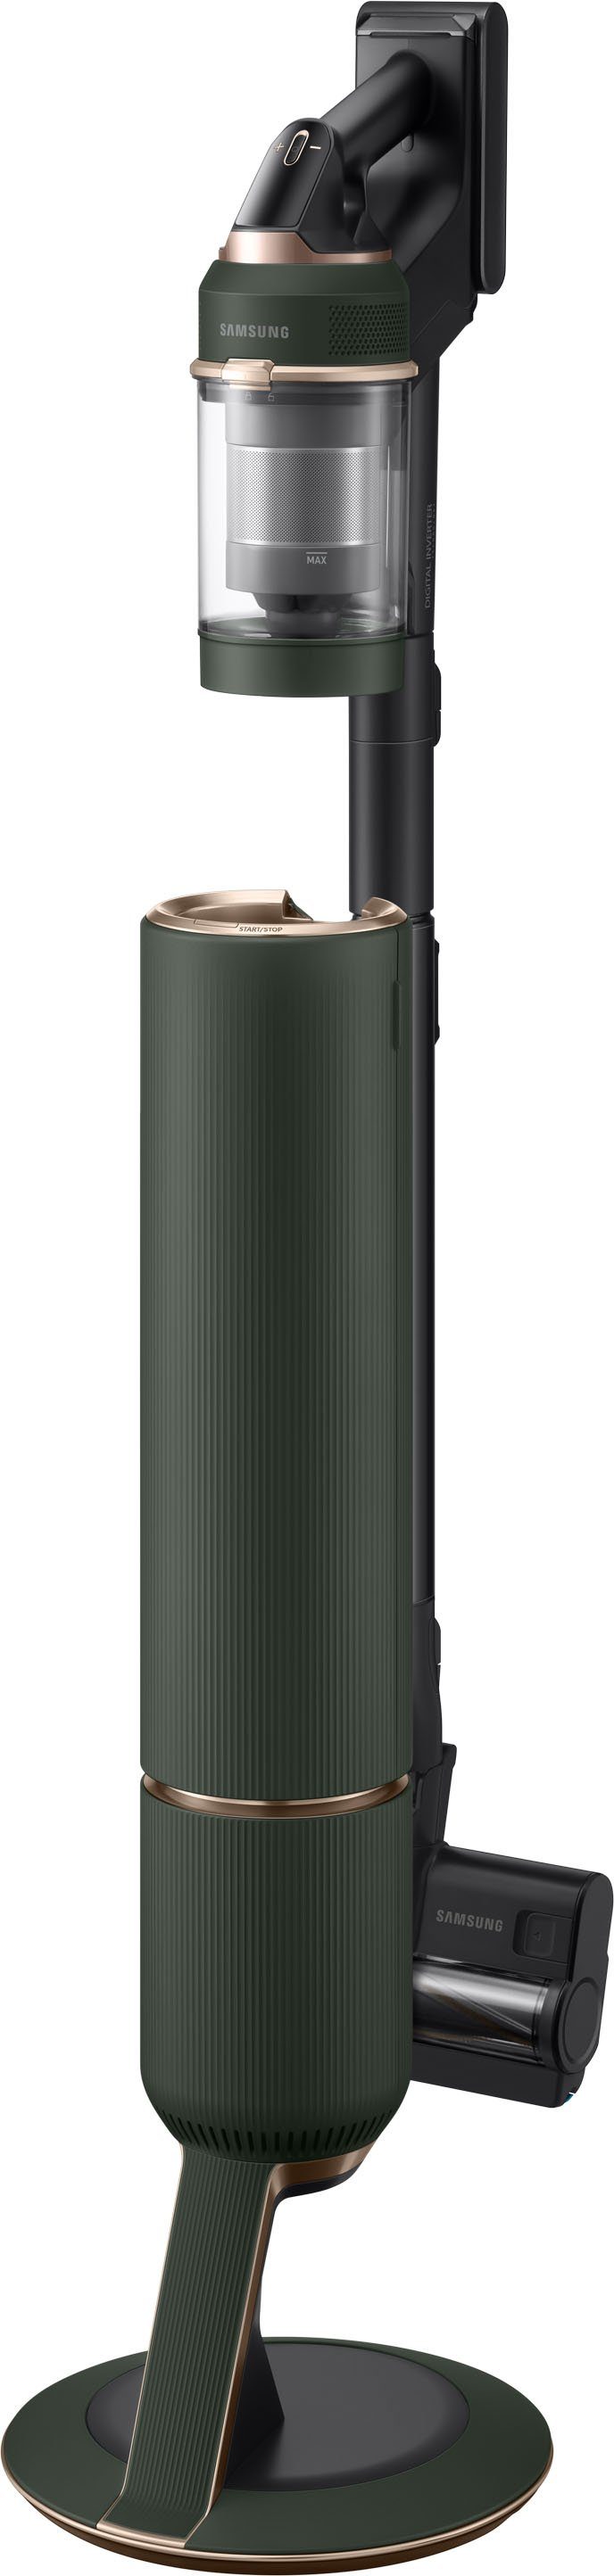 Samsung Akku-Bodenstaubsauger BESPOKE Jet complete grün, extra 580 W, VS20A95943N/WA, beutellos